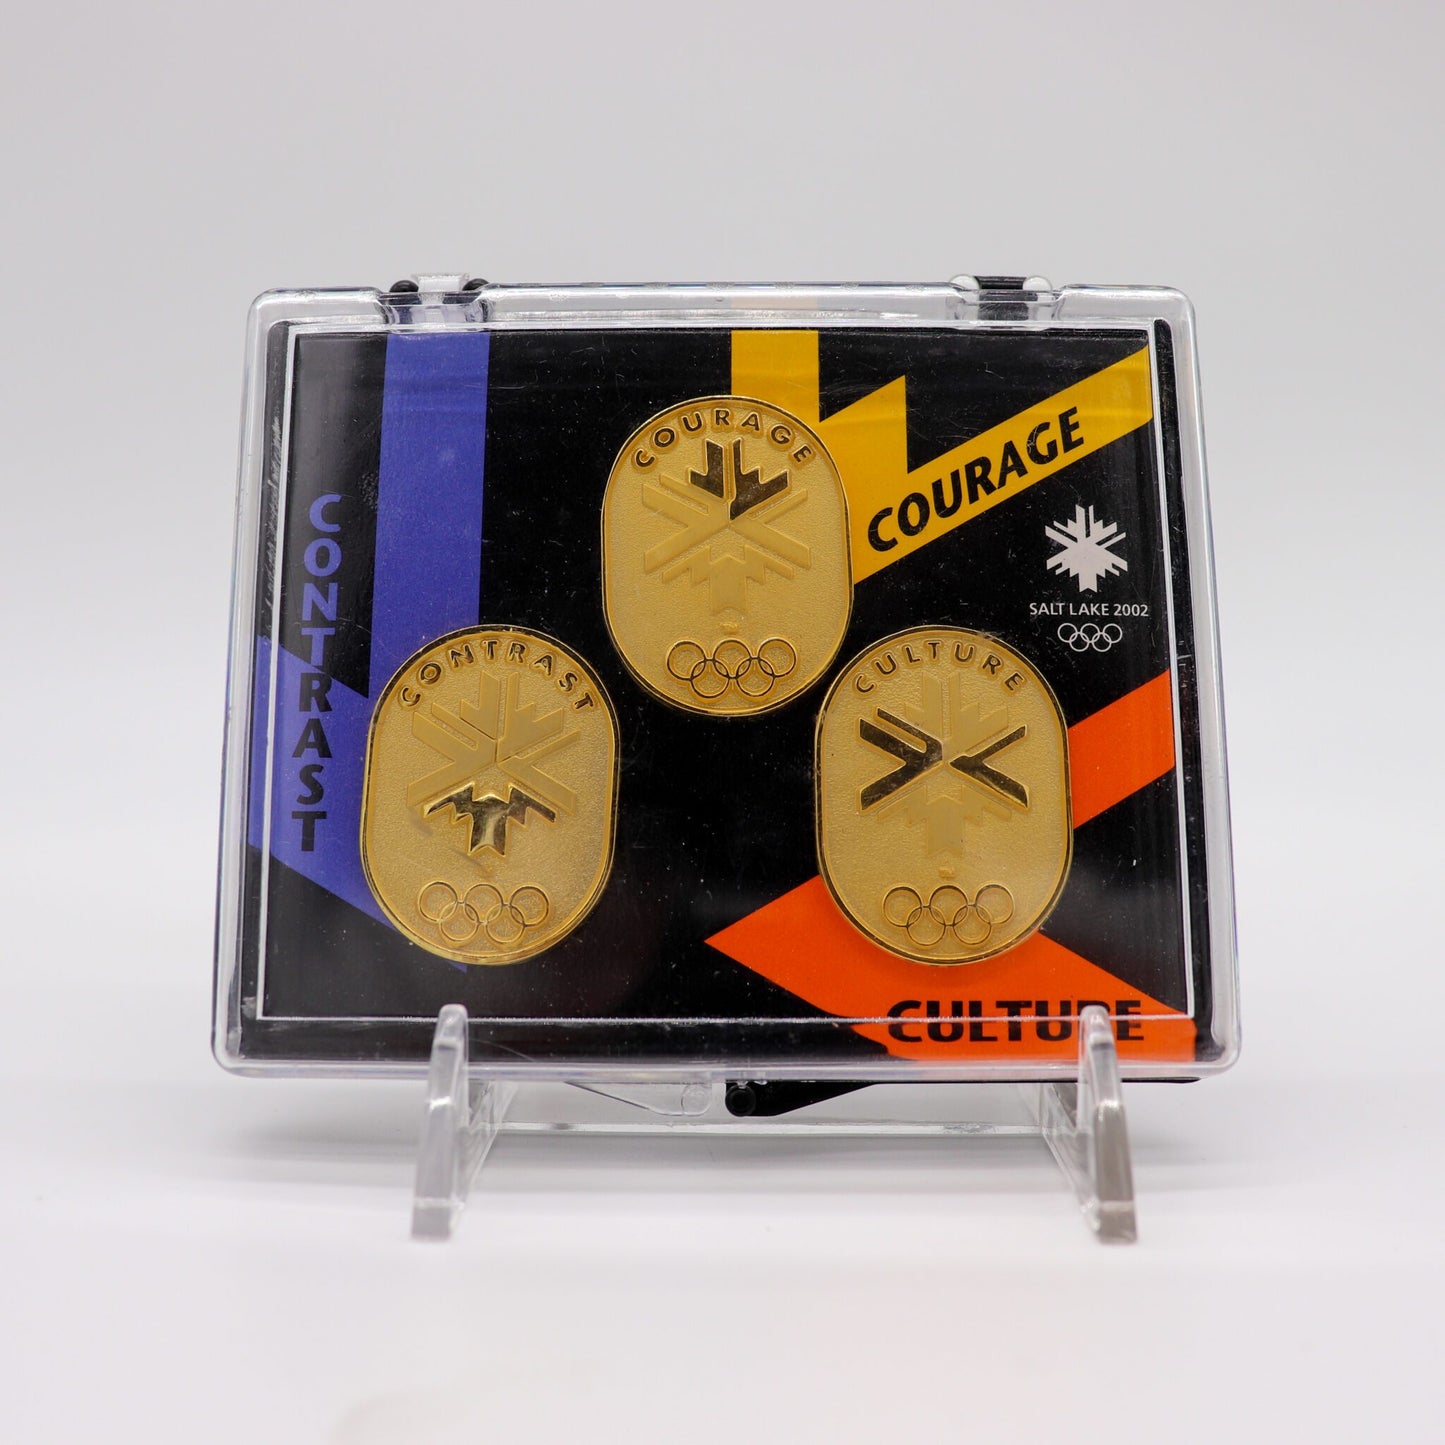 2002 Salt Lake City Winter Olympics Limited Edition Pin Set, Mint